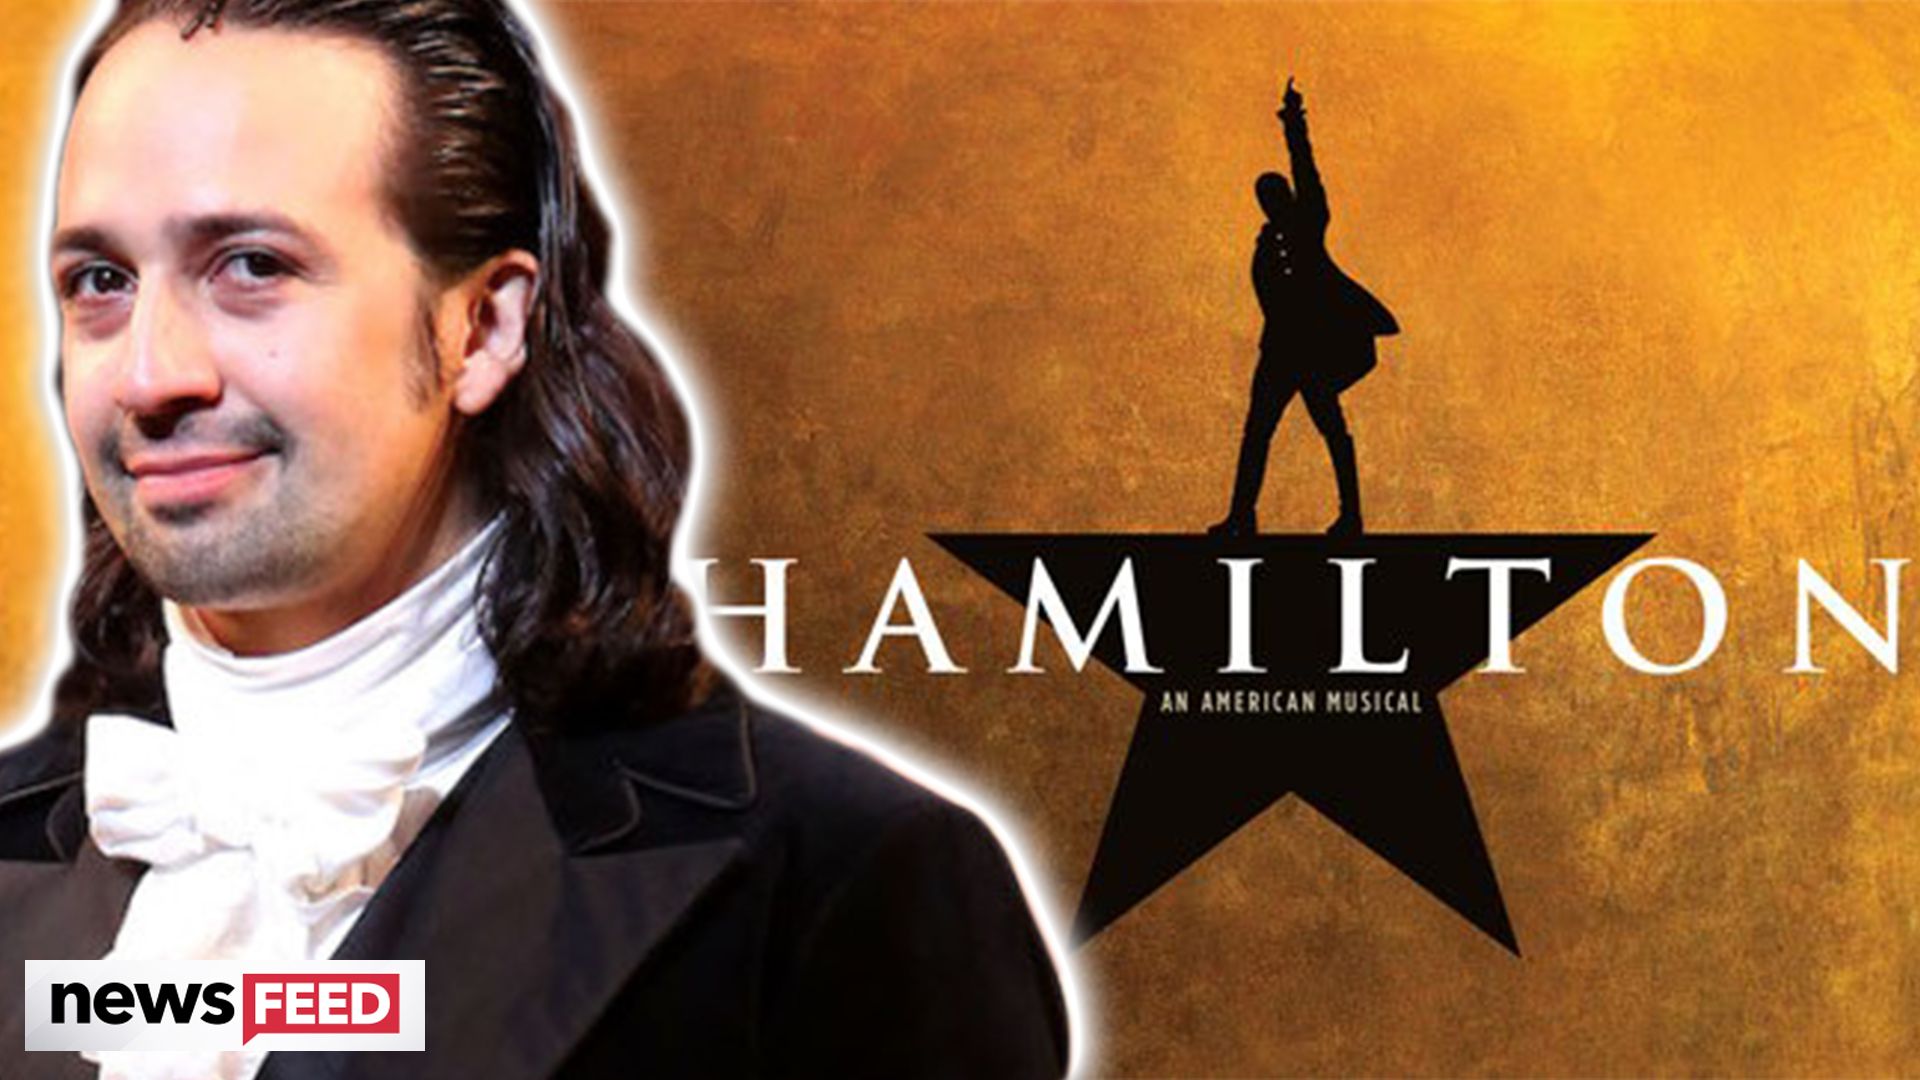 Lin-Manuel Miranda Responds to 'Cancel Hamilton' Controversy